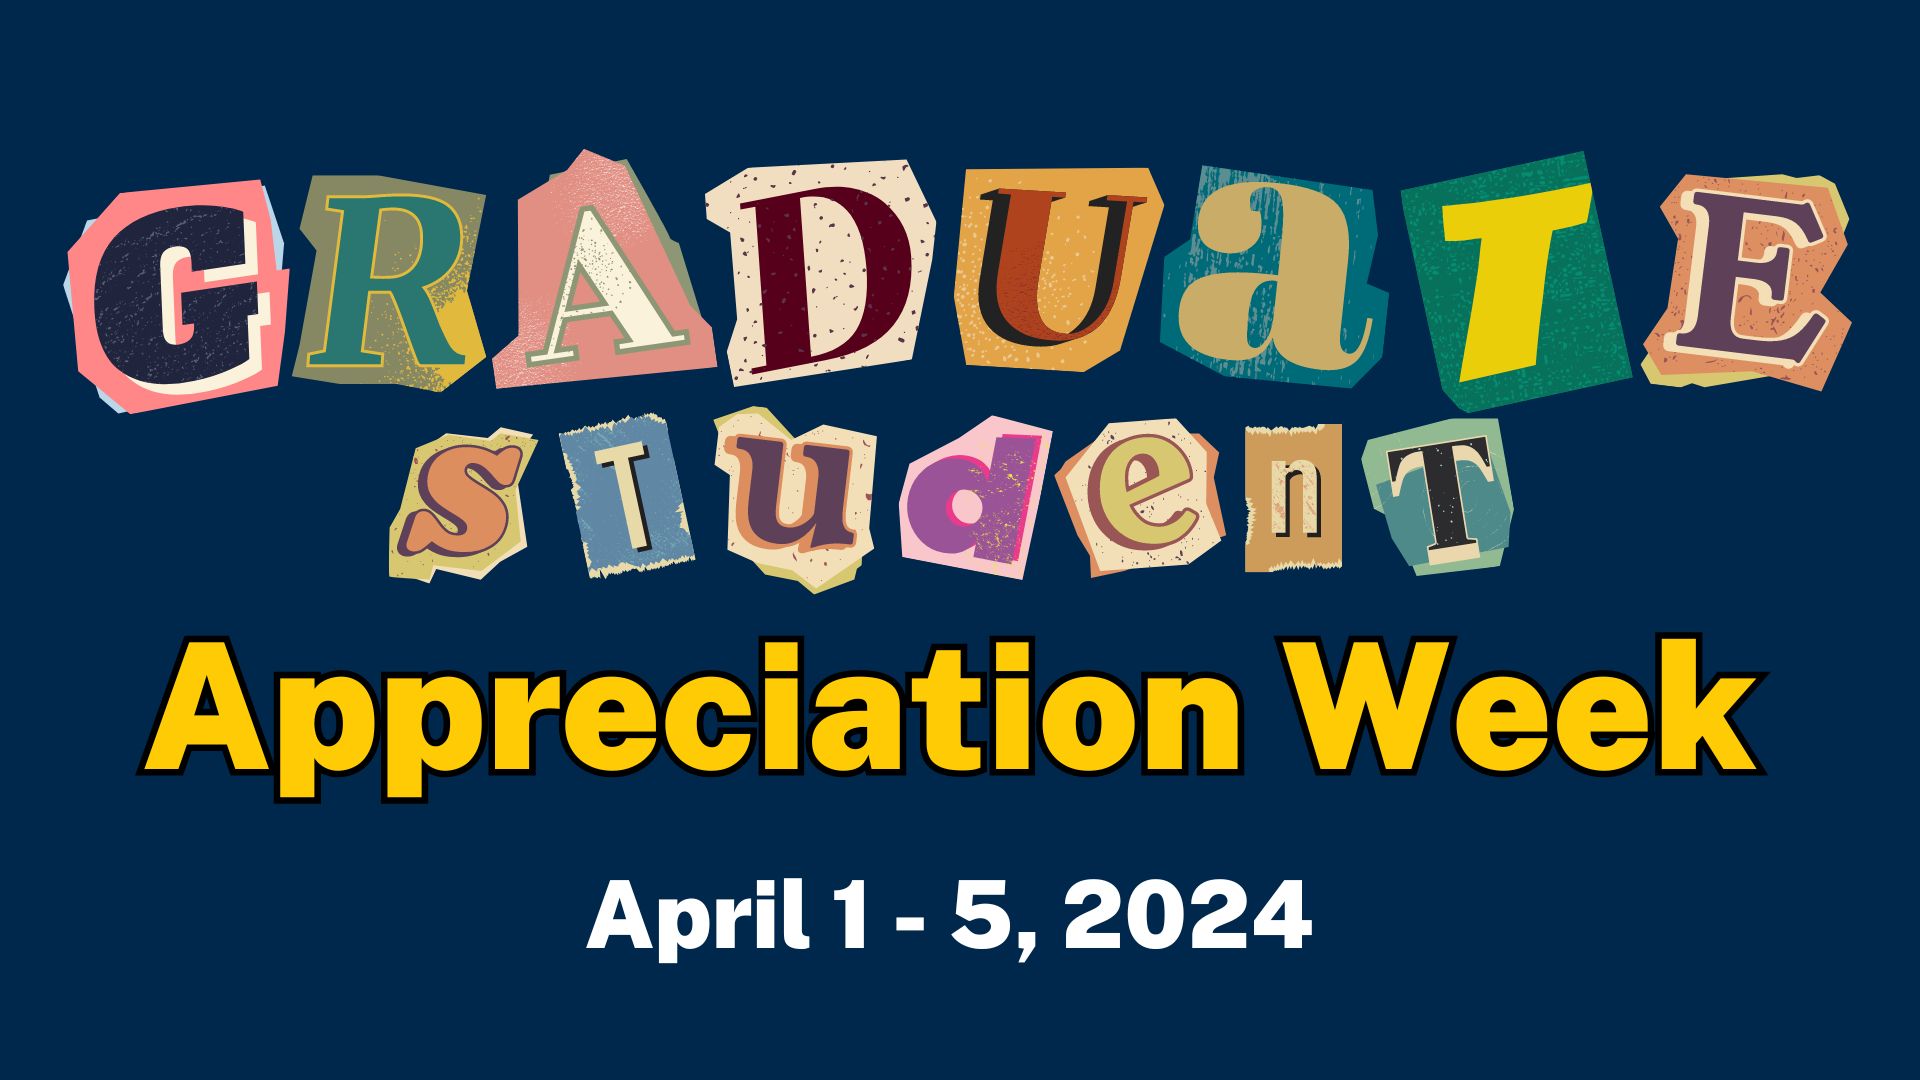 Graduate Appreciation Week sign for 2024